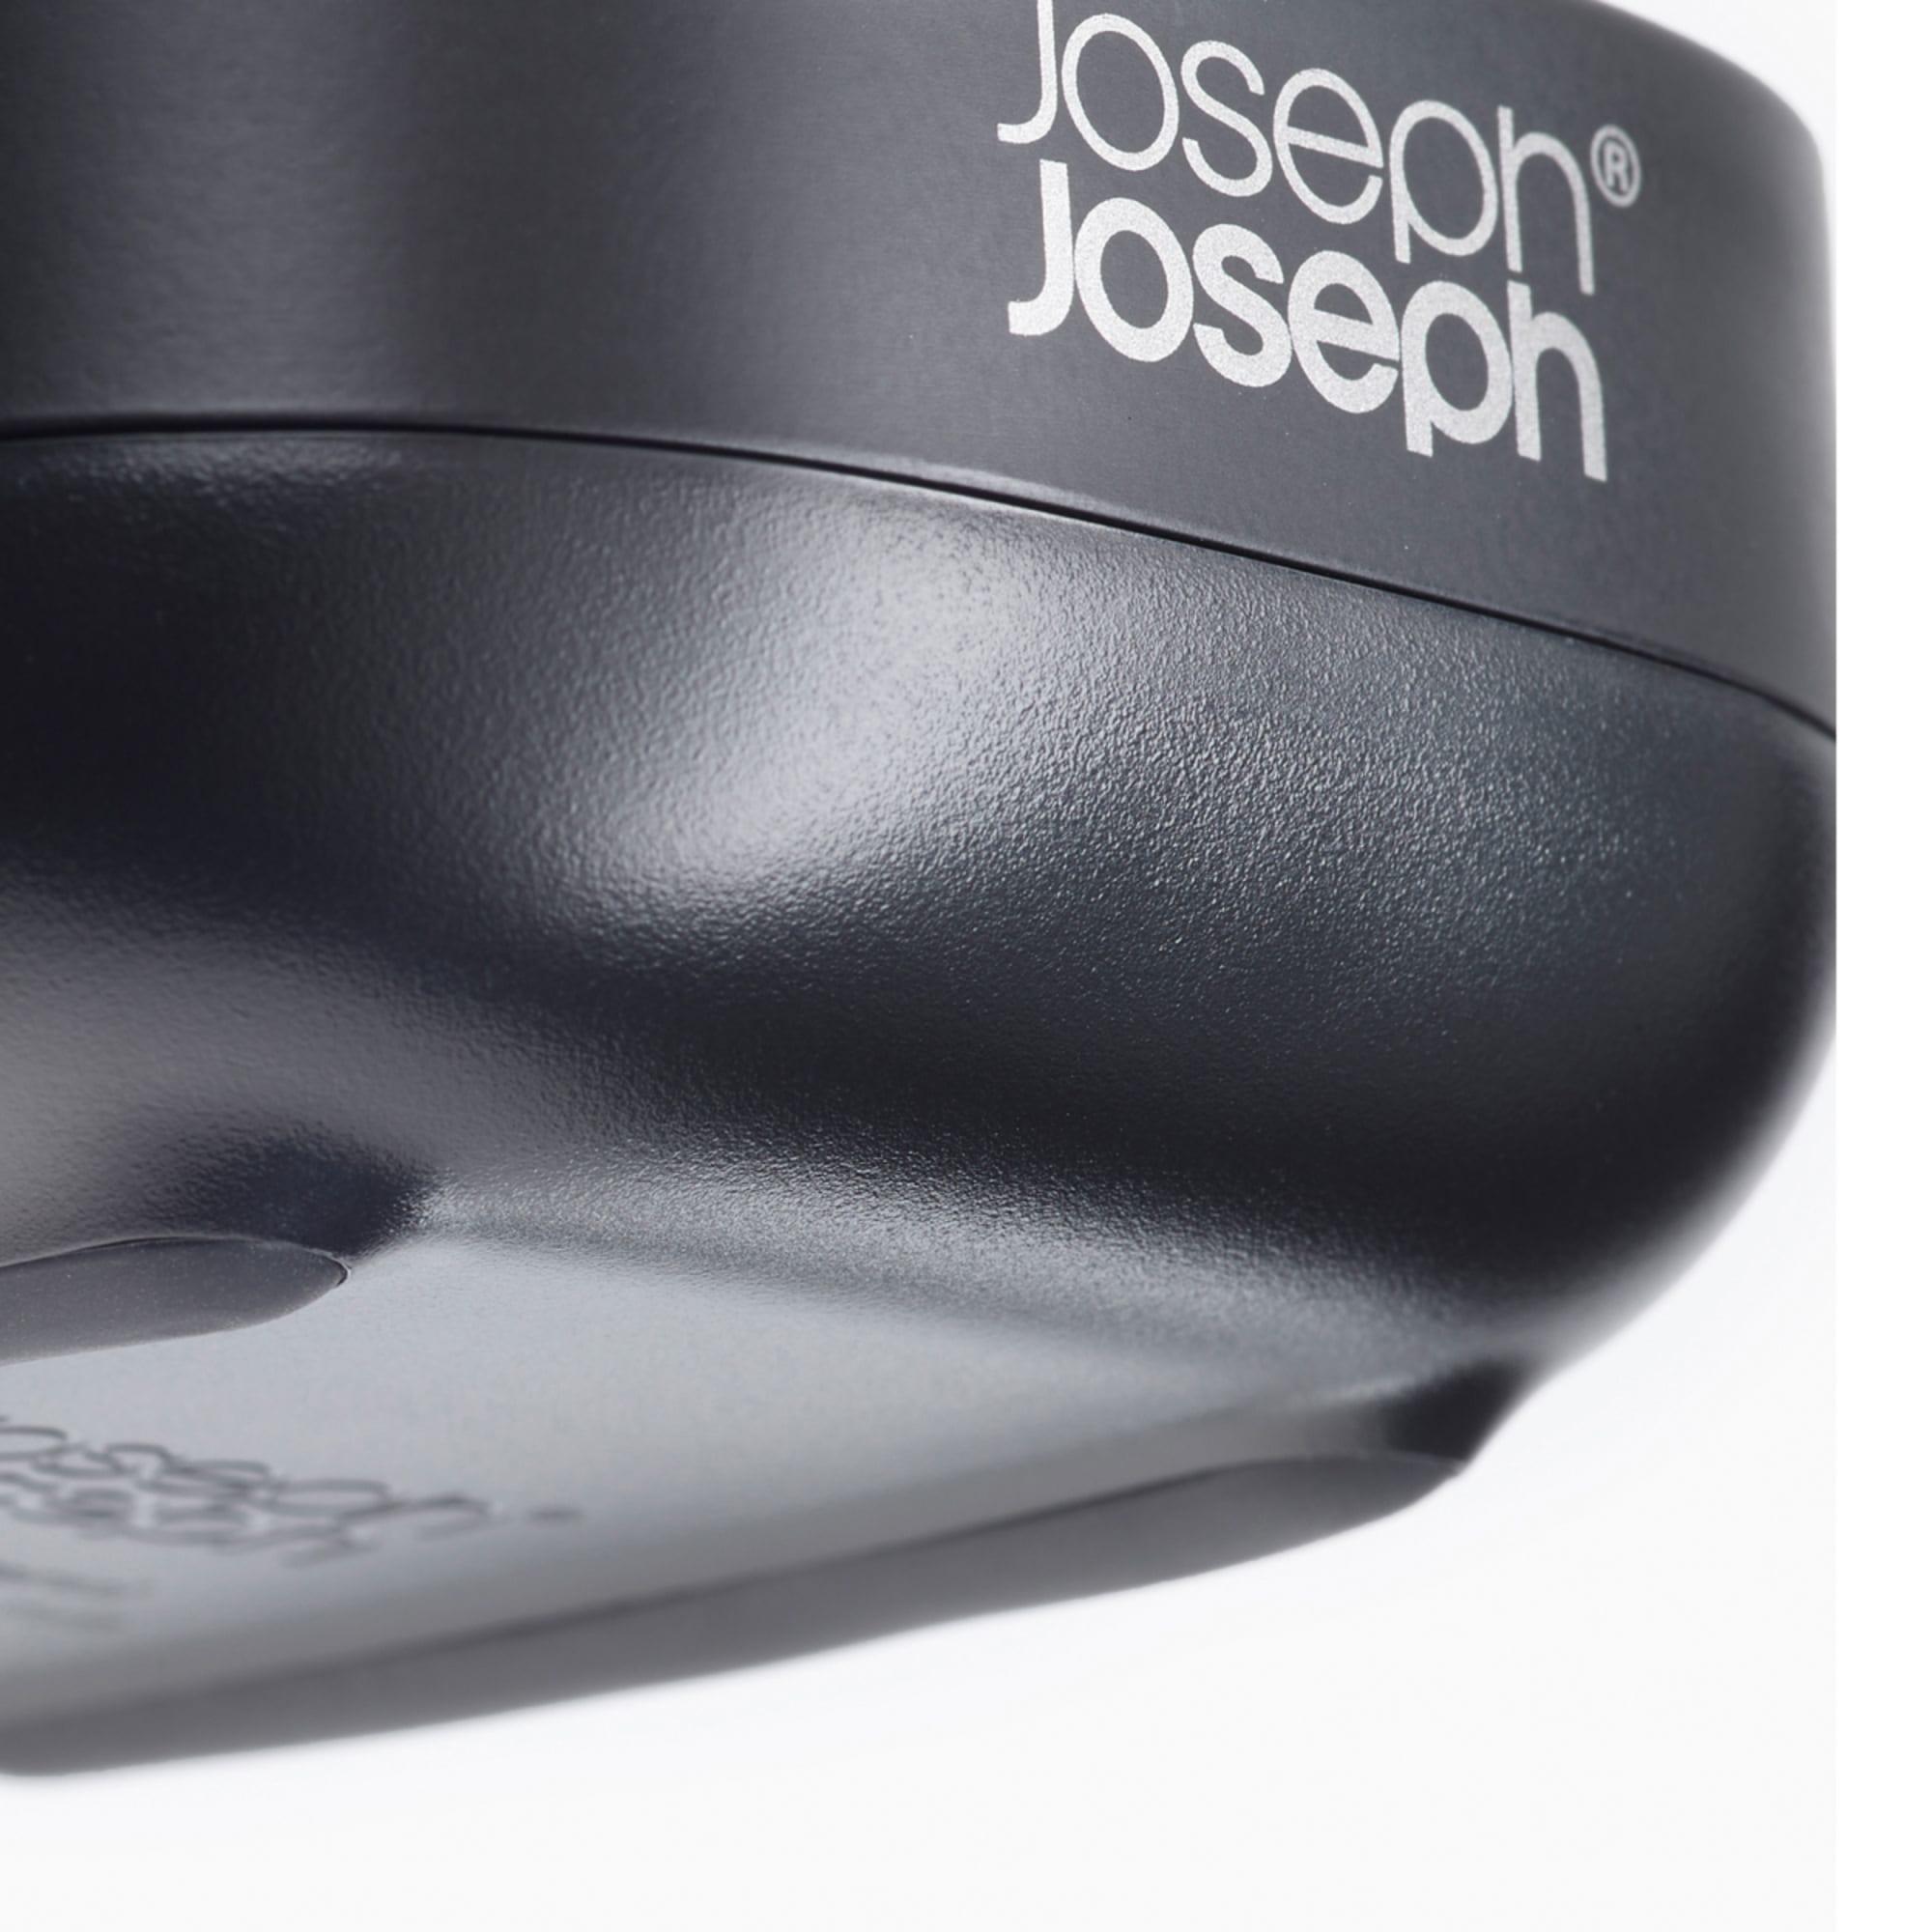 Joseph Joseph Slim Compact Soap Dish Black Image 10